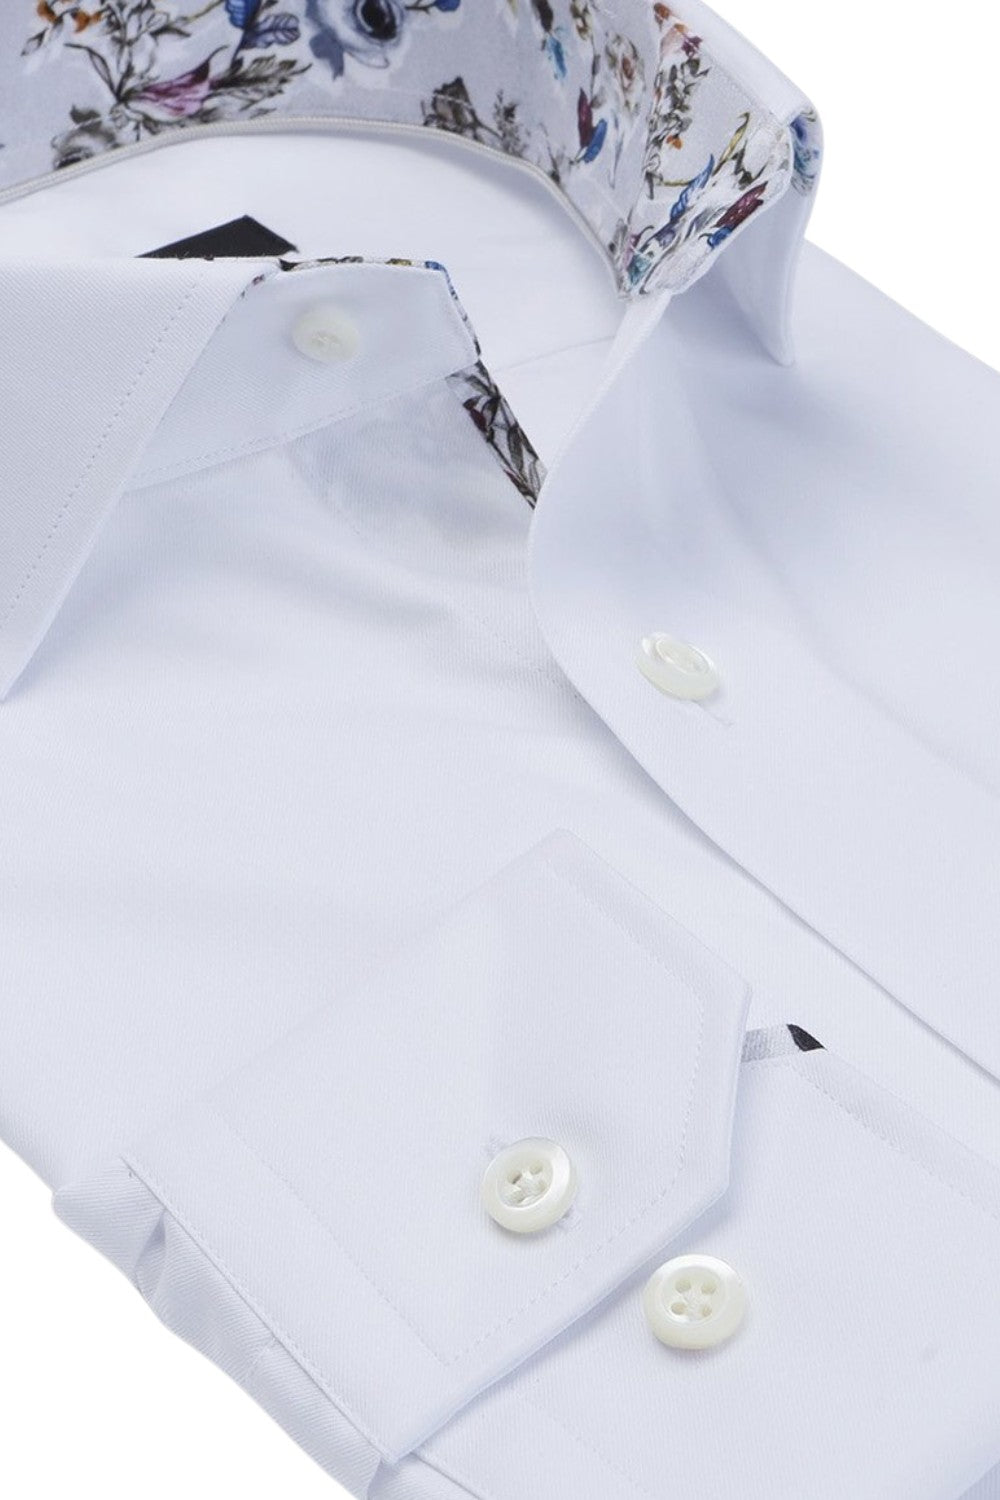 BENNETT WHITE BUTTON DOWN DRESS SHIRT - CASUAL /FORMAL EVENT - SIDE VIEW